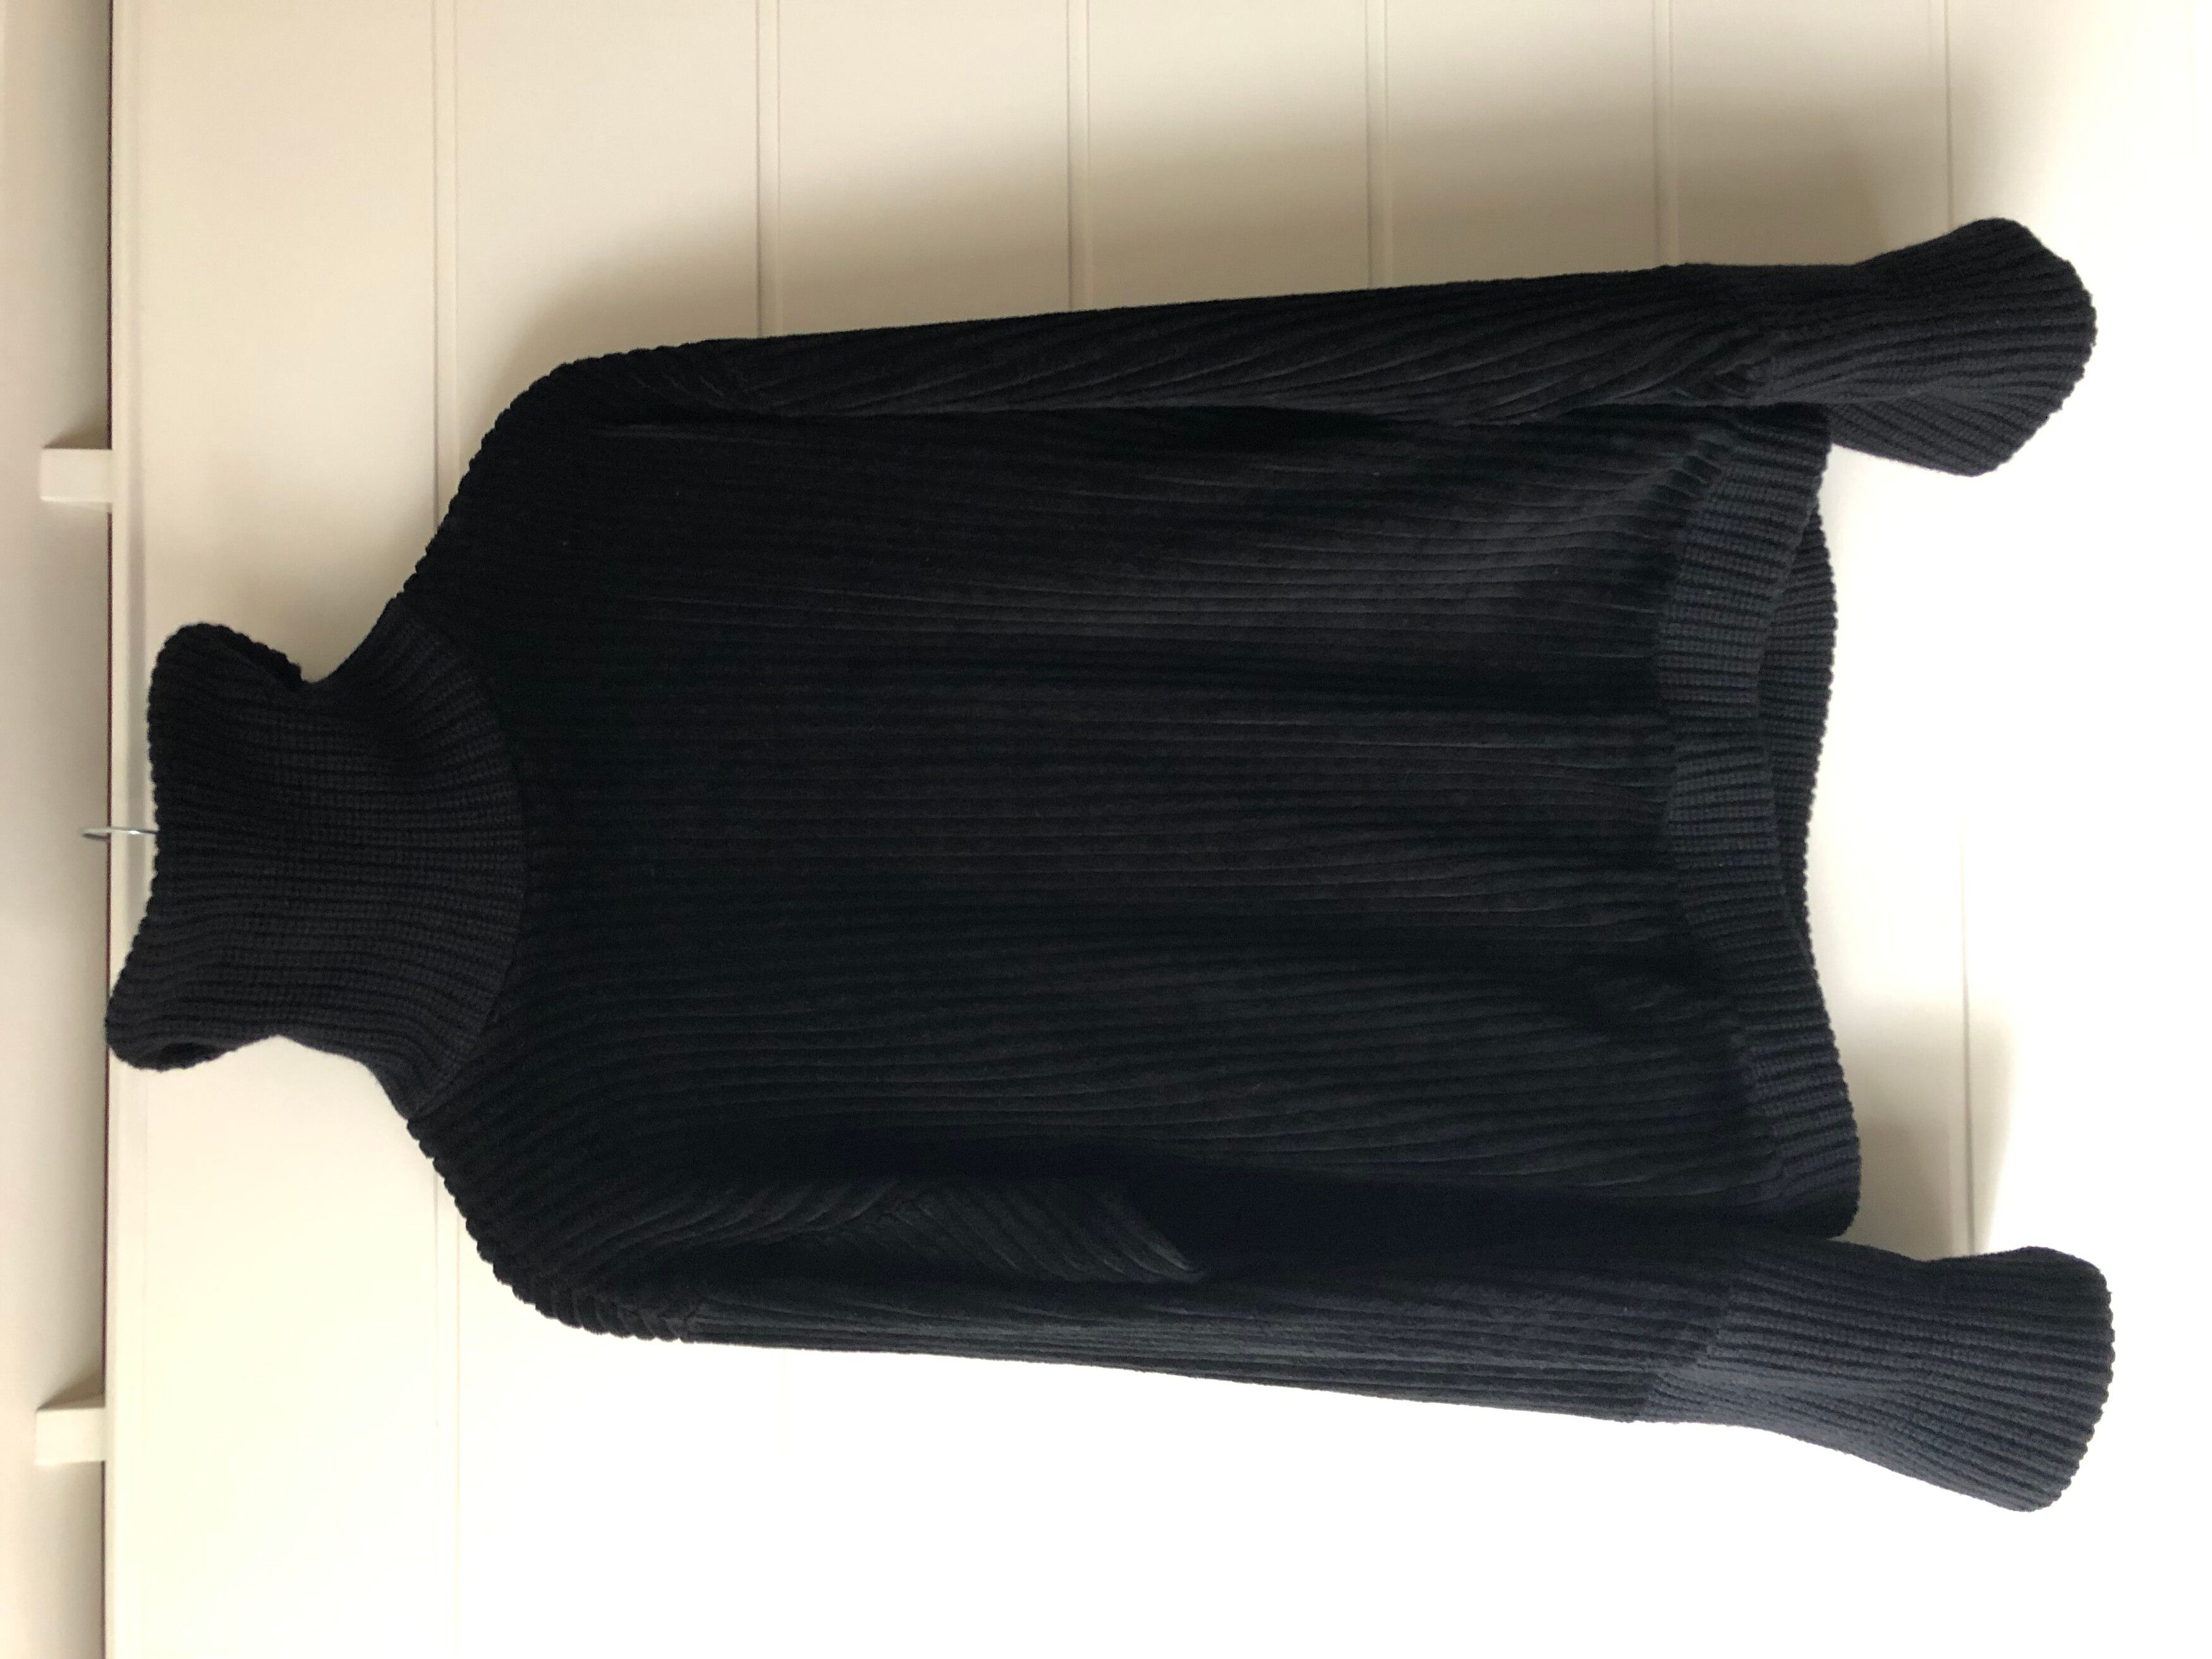 Raf Simons A/W 2000 'Confusion' Black Corduroy Sweater | Grailed